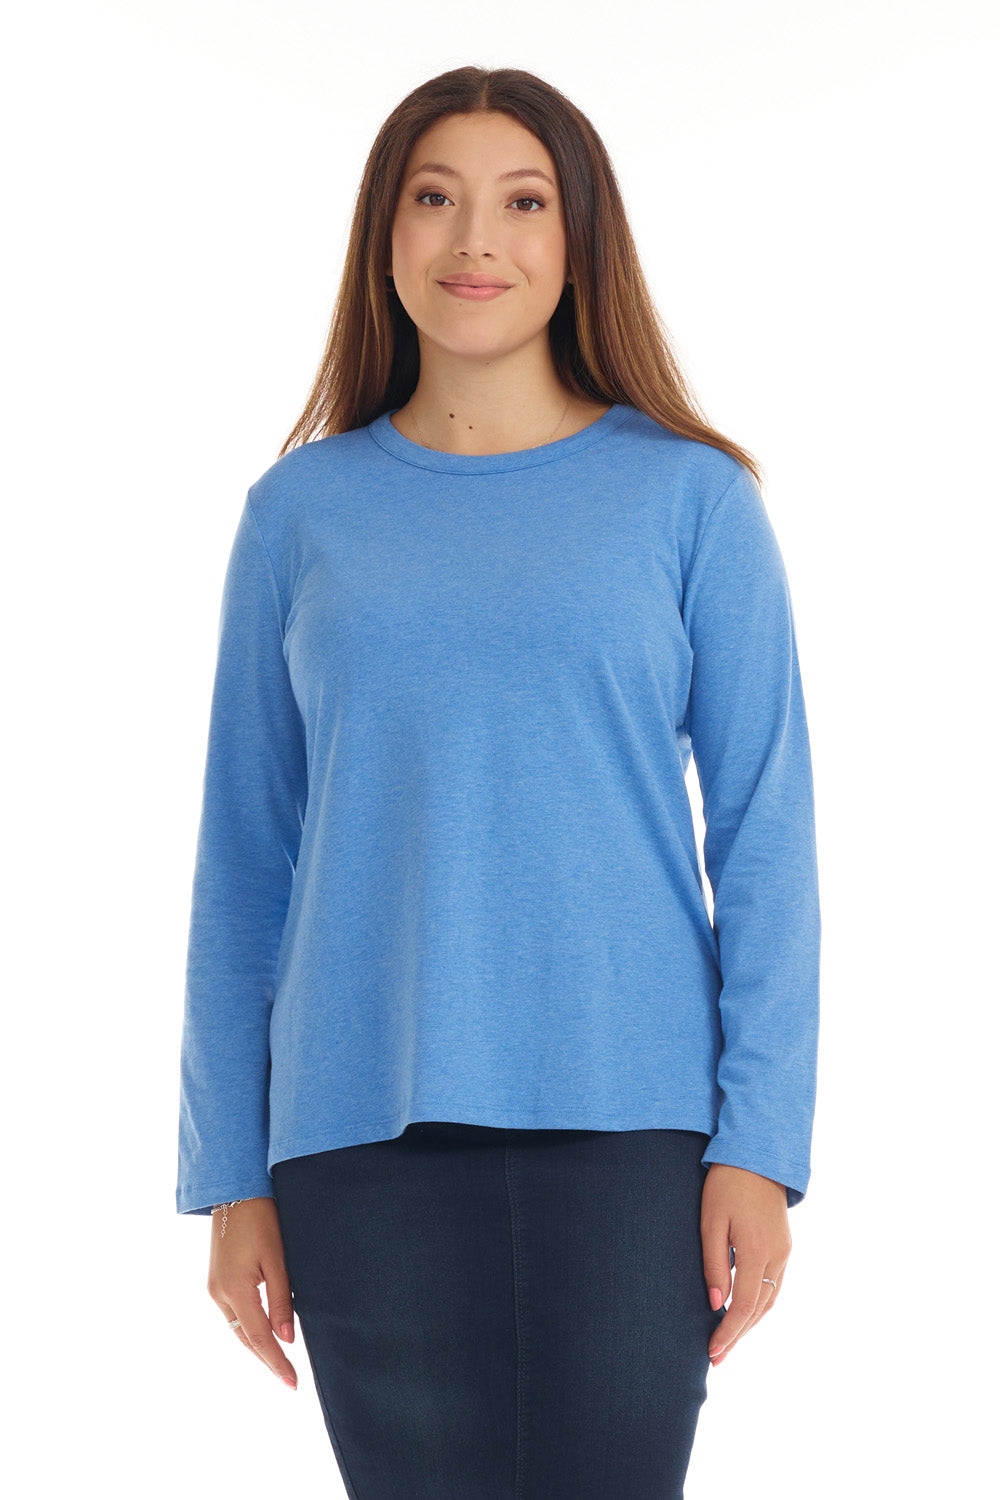 blue basic loose cotton shirt for women 